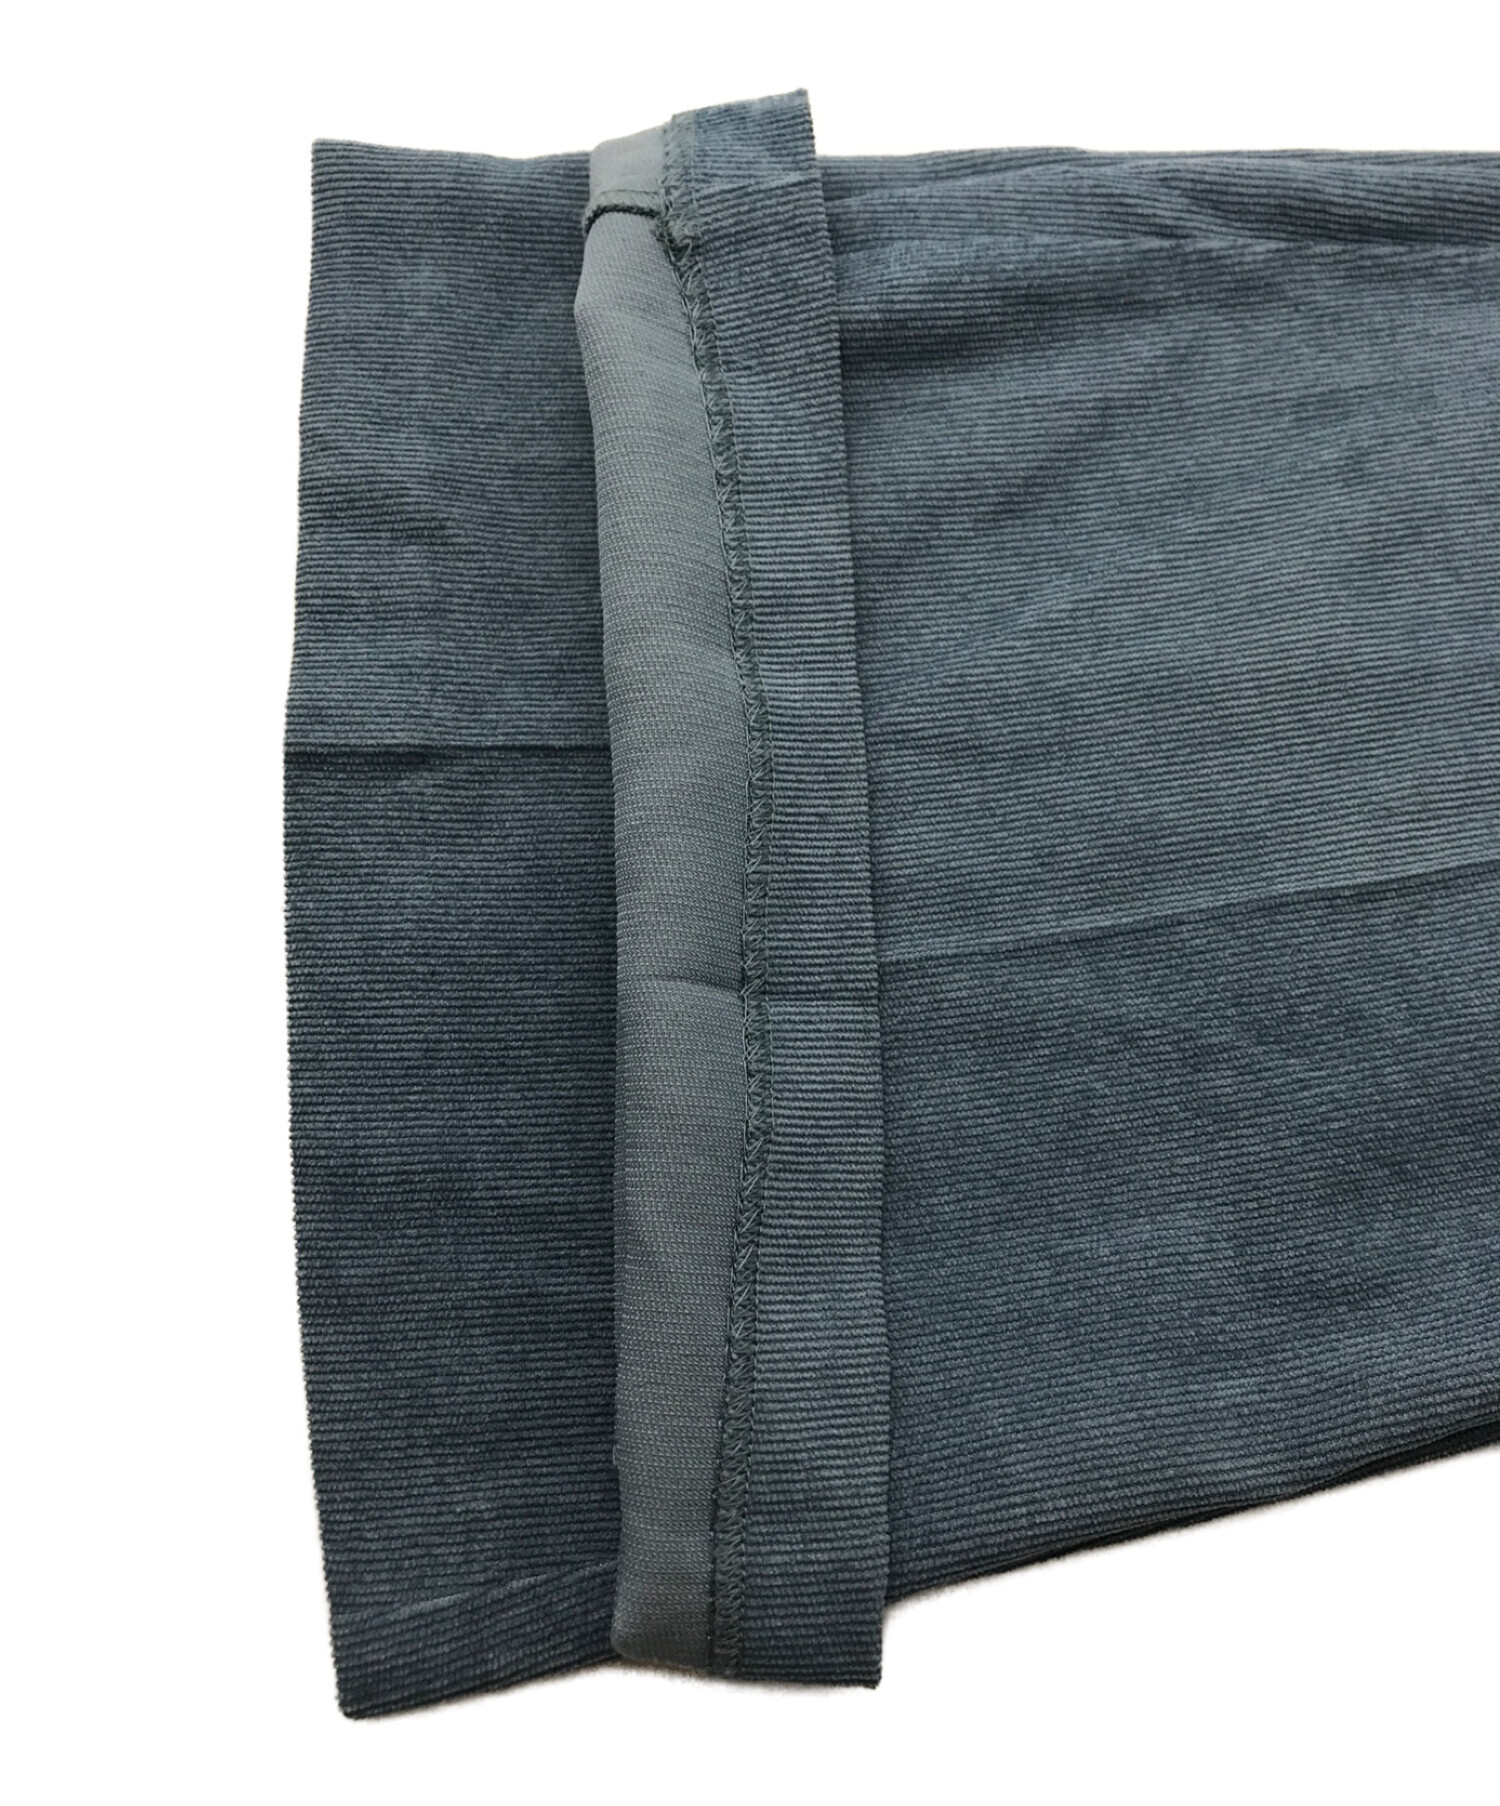 CLANE (クラネ) CORDUROY BELL BOTTOM PANTS ブルー サイズ:2